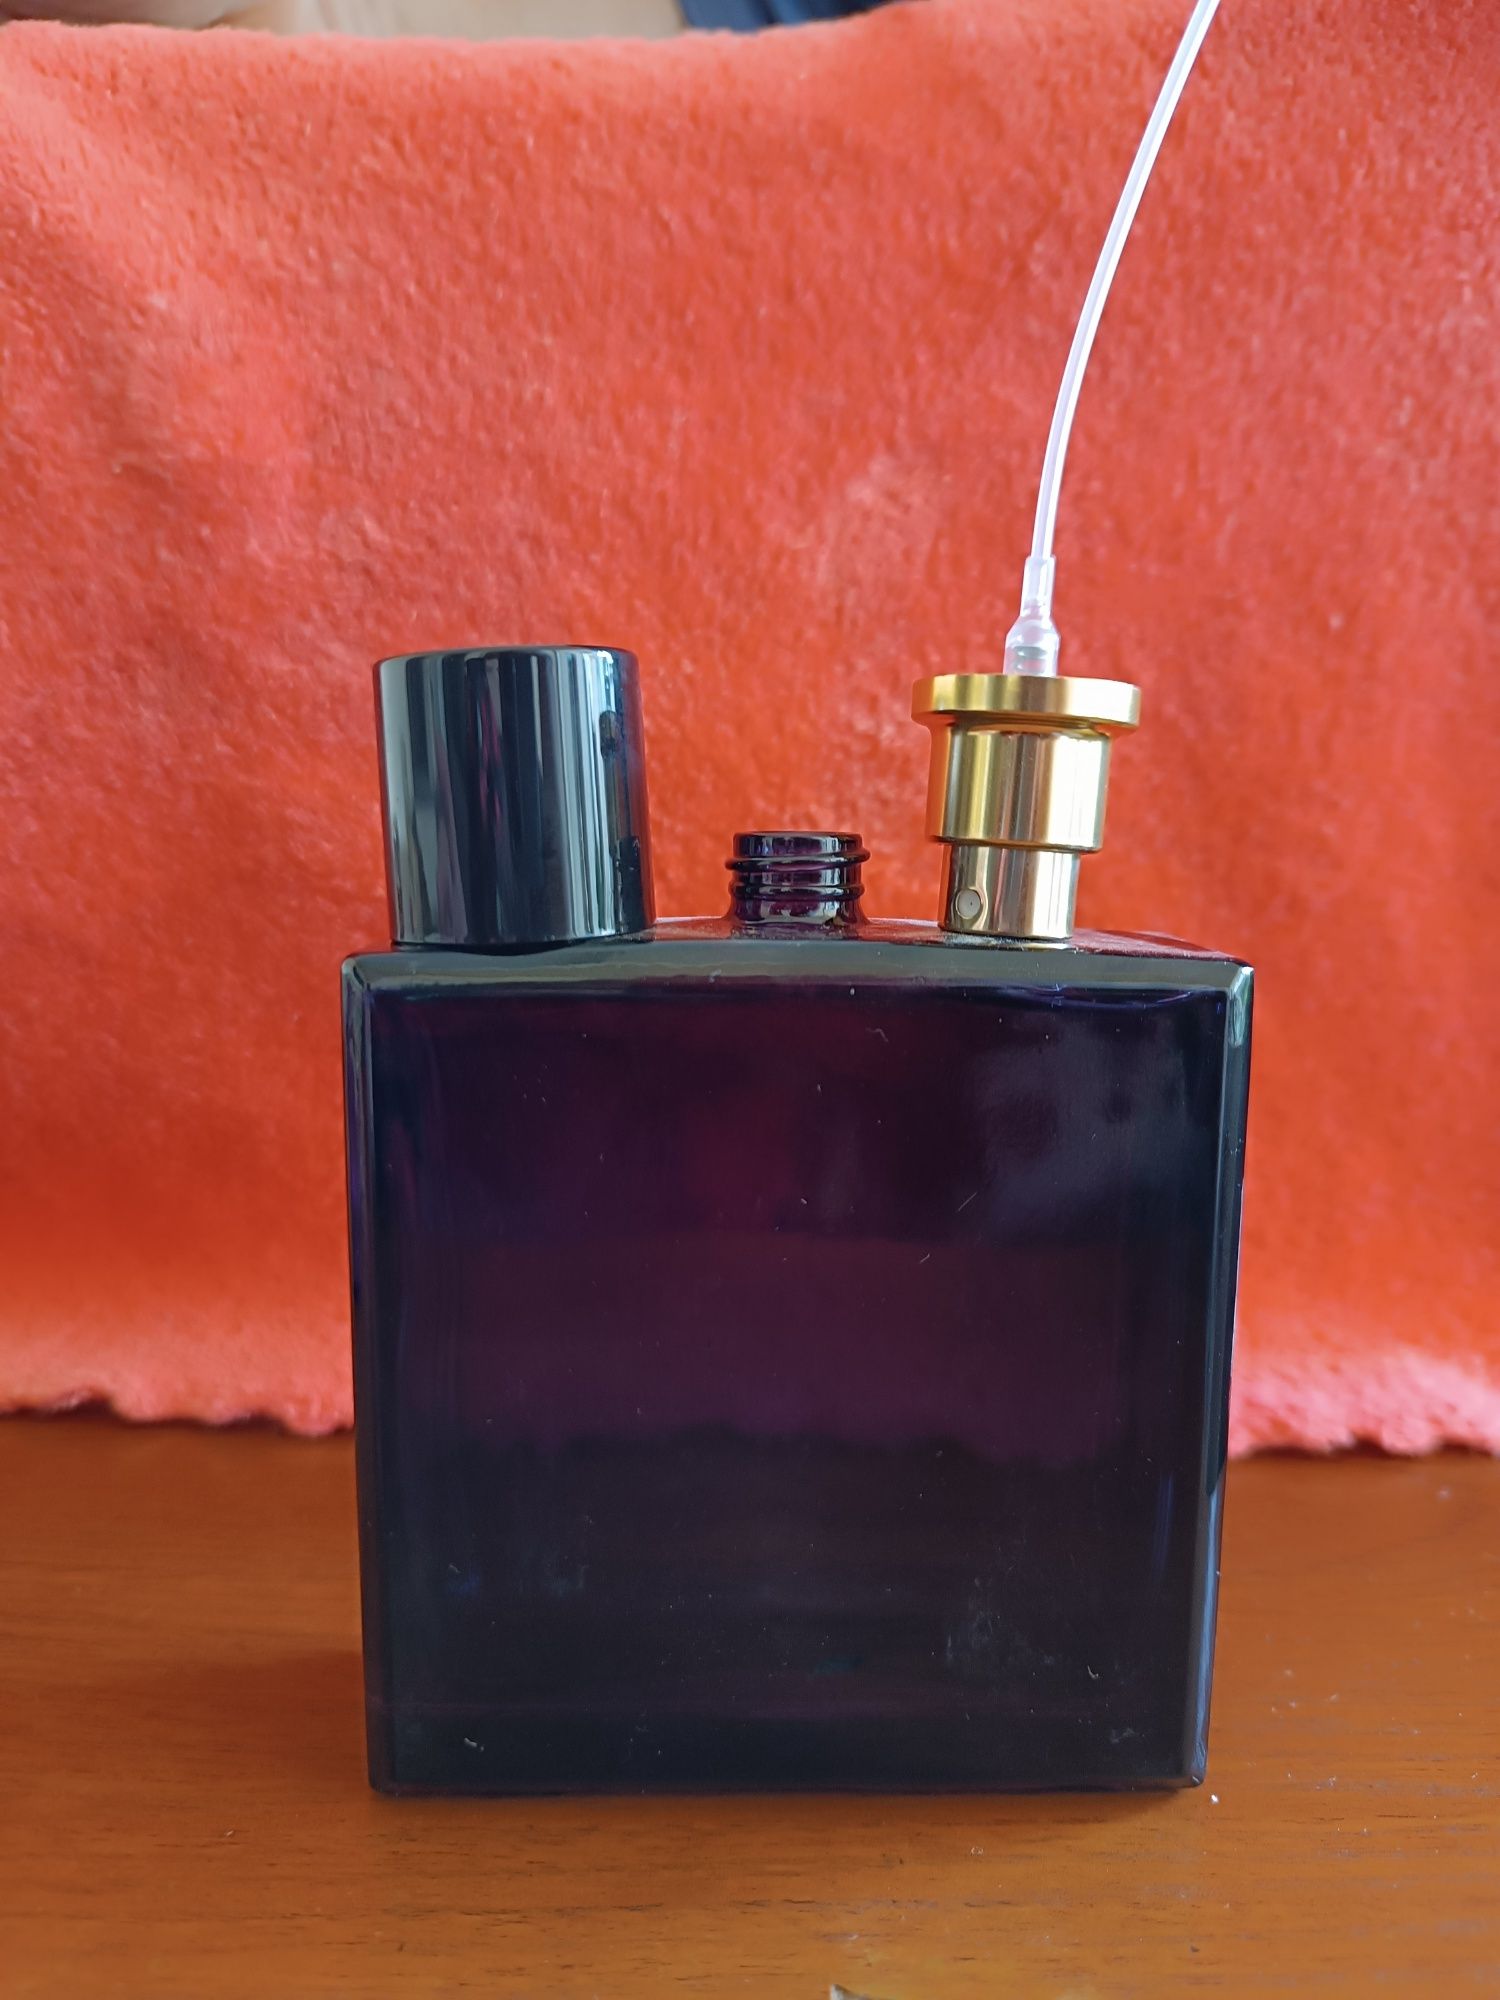 Флаконы для парфюмерии